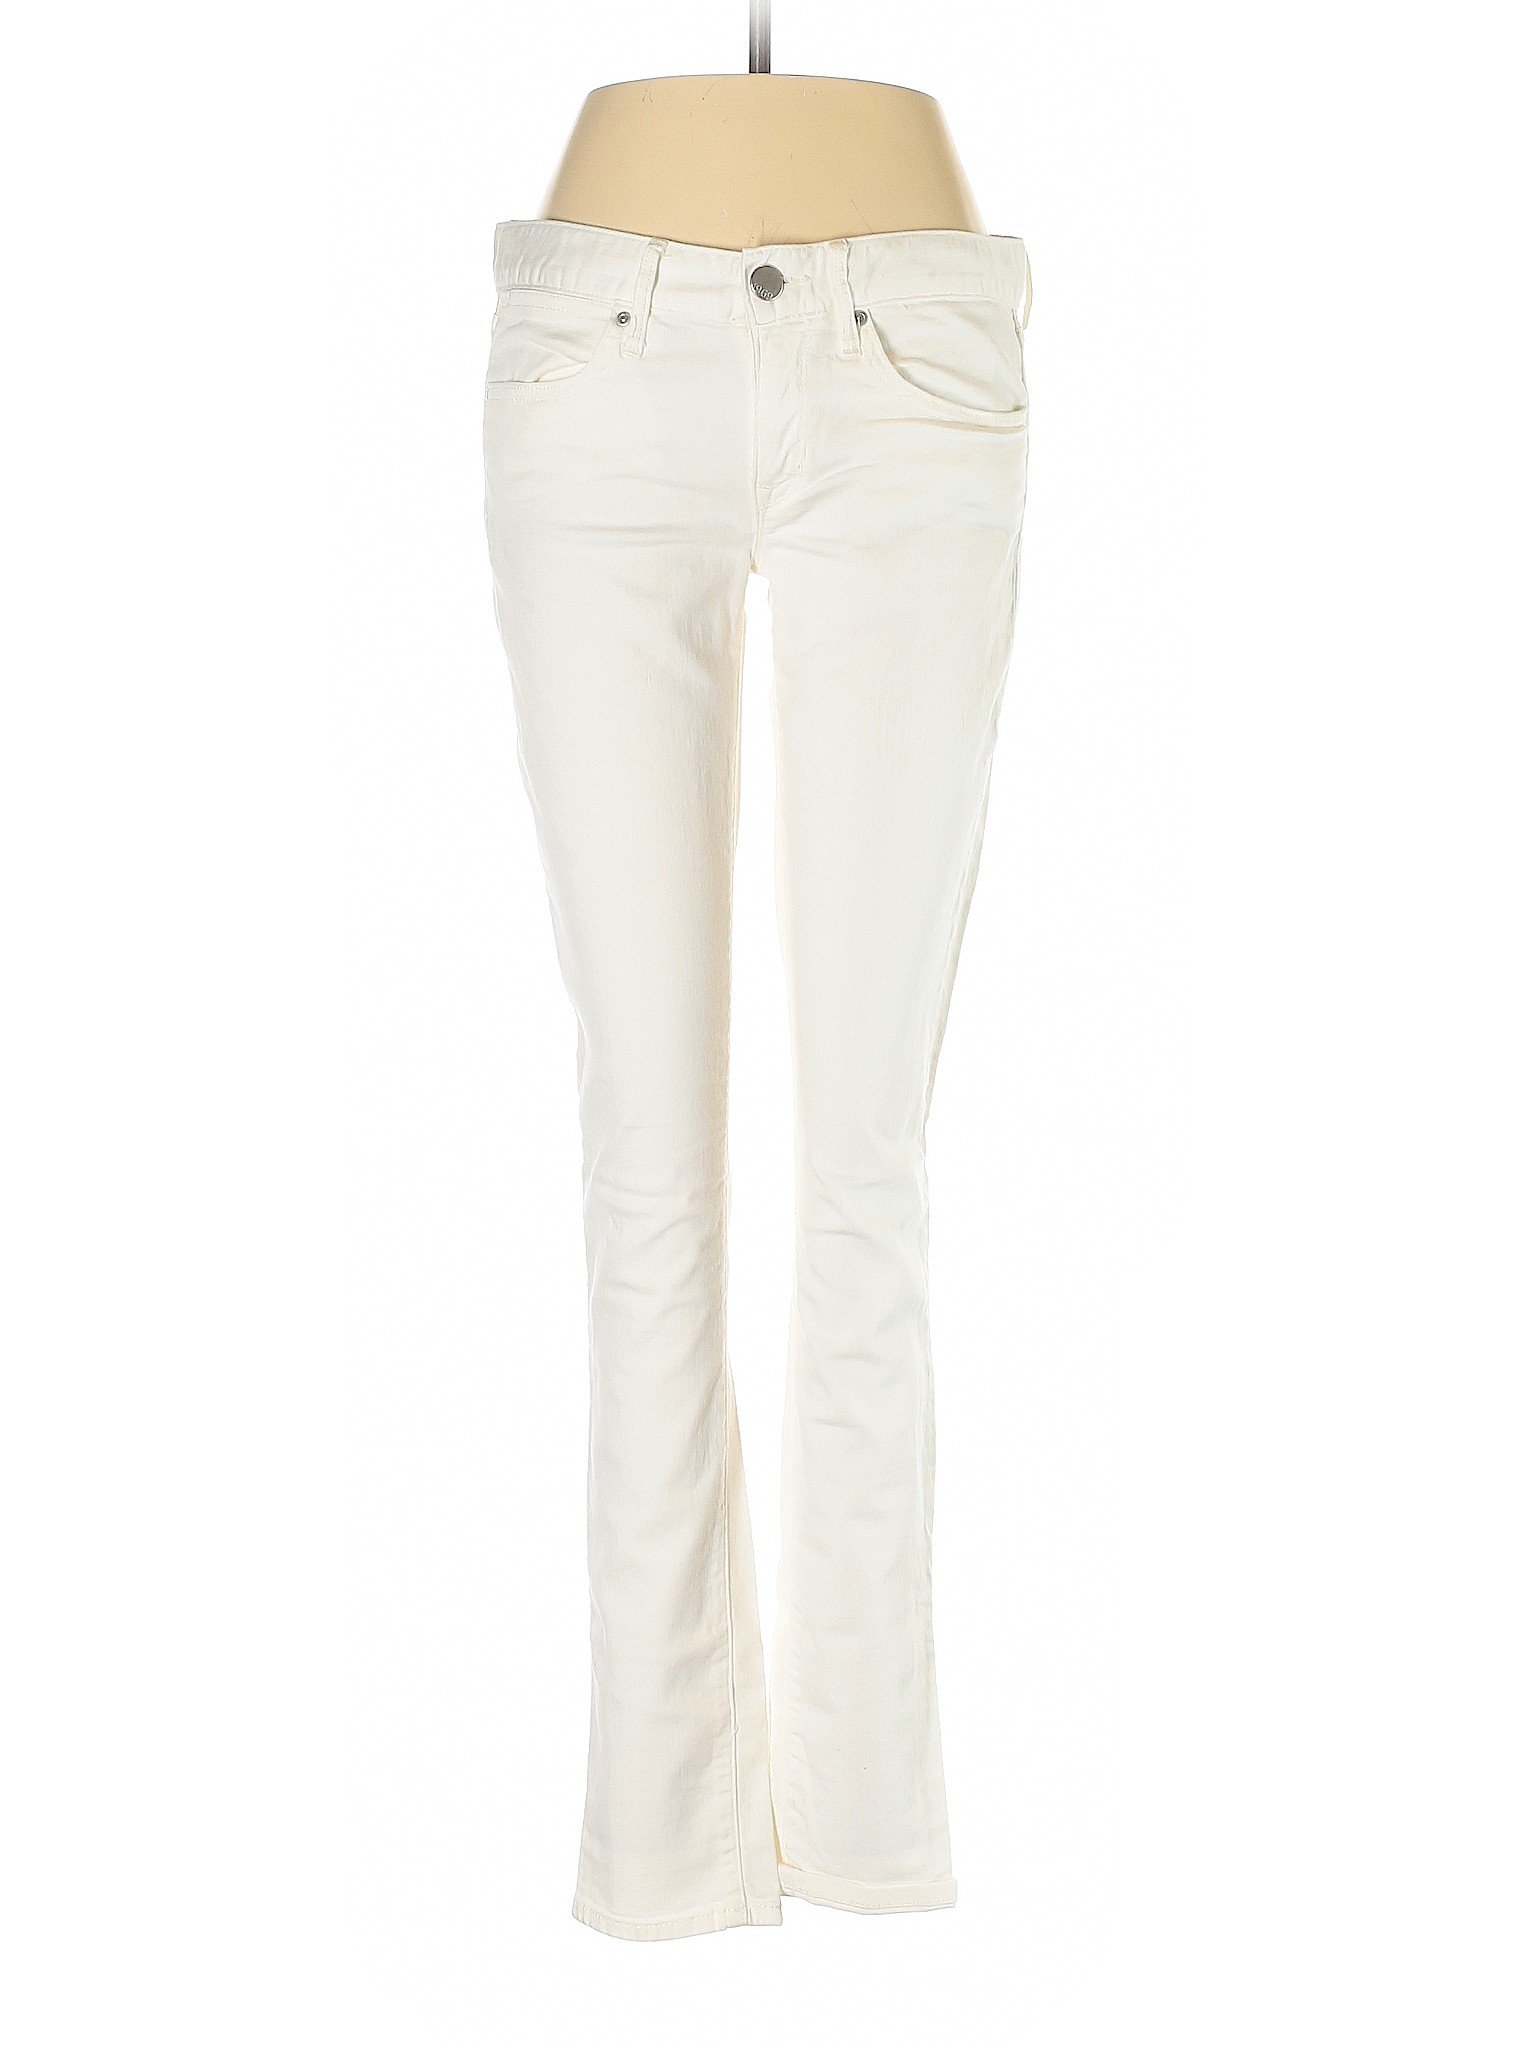 Gap Women White Jeans 6 | eBay